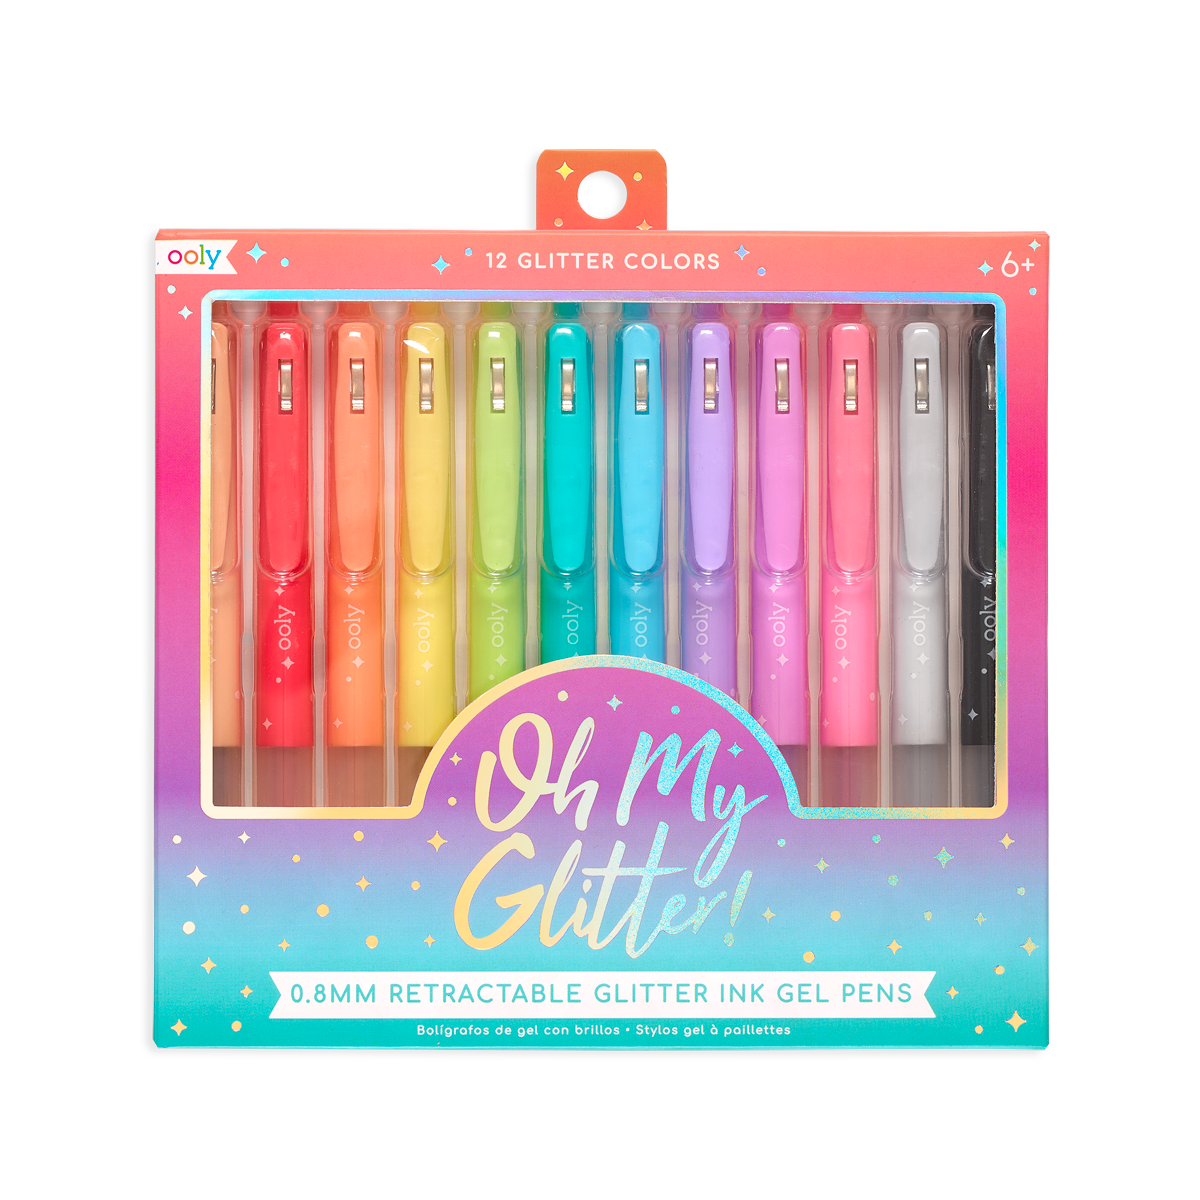 yummy yummy scented glitter gel pens 2.0 – MONSTER KIDS